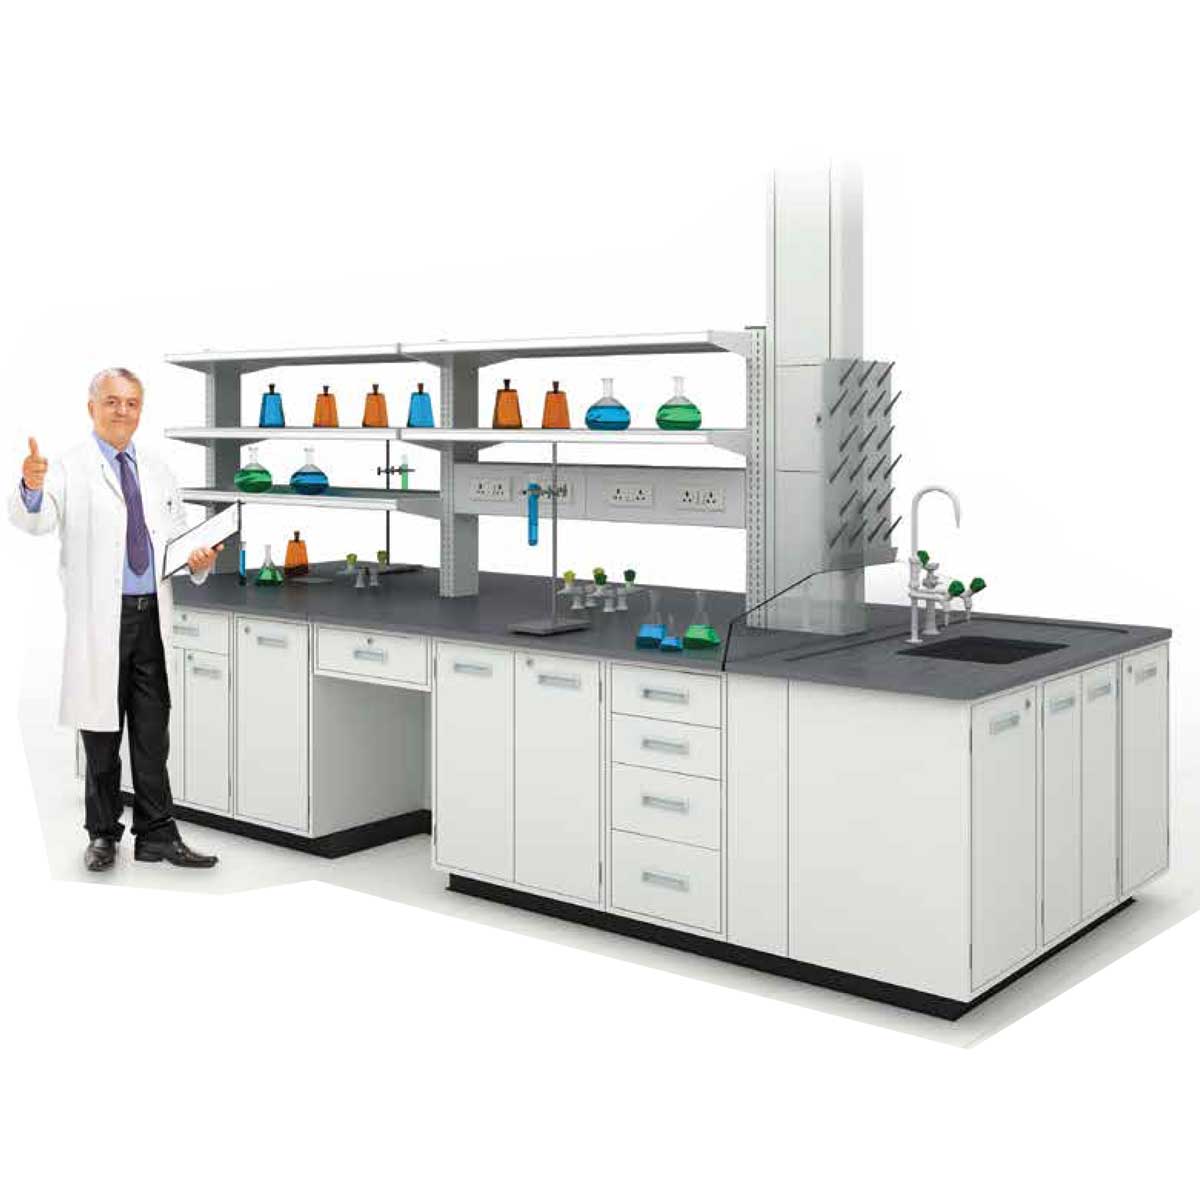 Laboratory Desks Manufacturers, Suppliers in Noida Sector 77